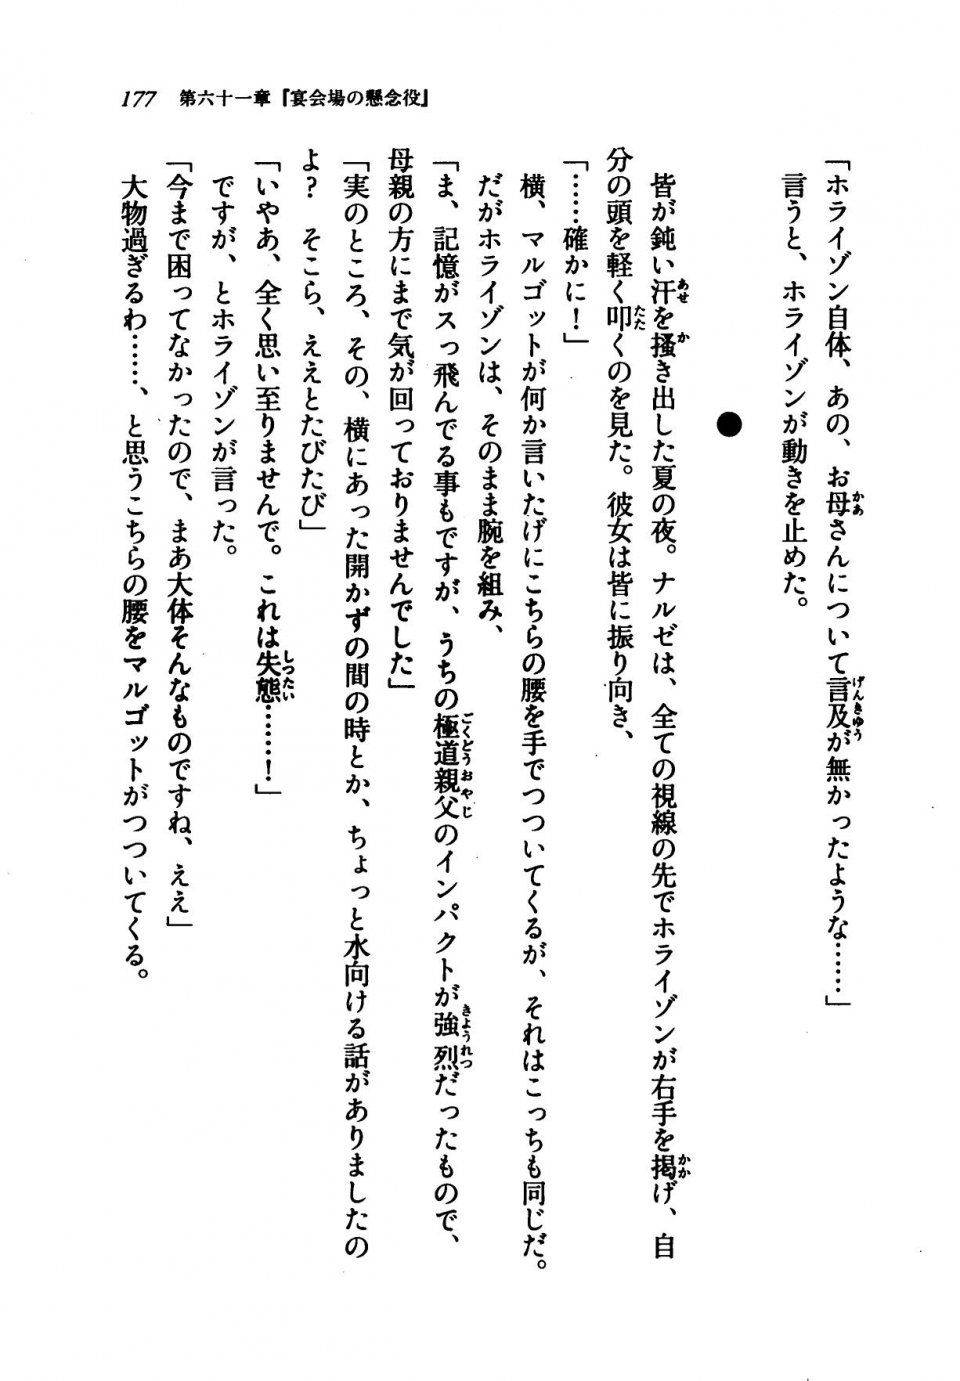 Kyoukai Senjou no Horizon LN Vol 21(8C) Part 1 - Photo #176